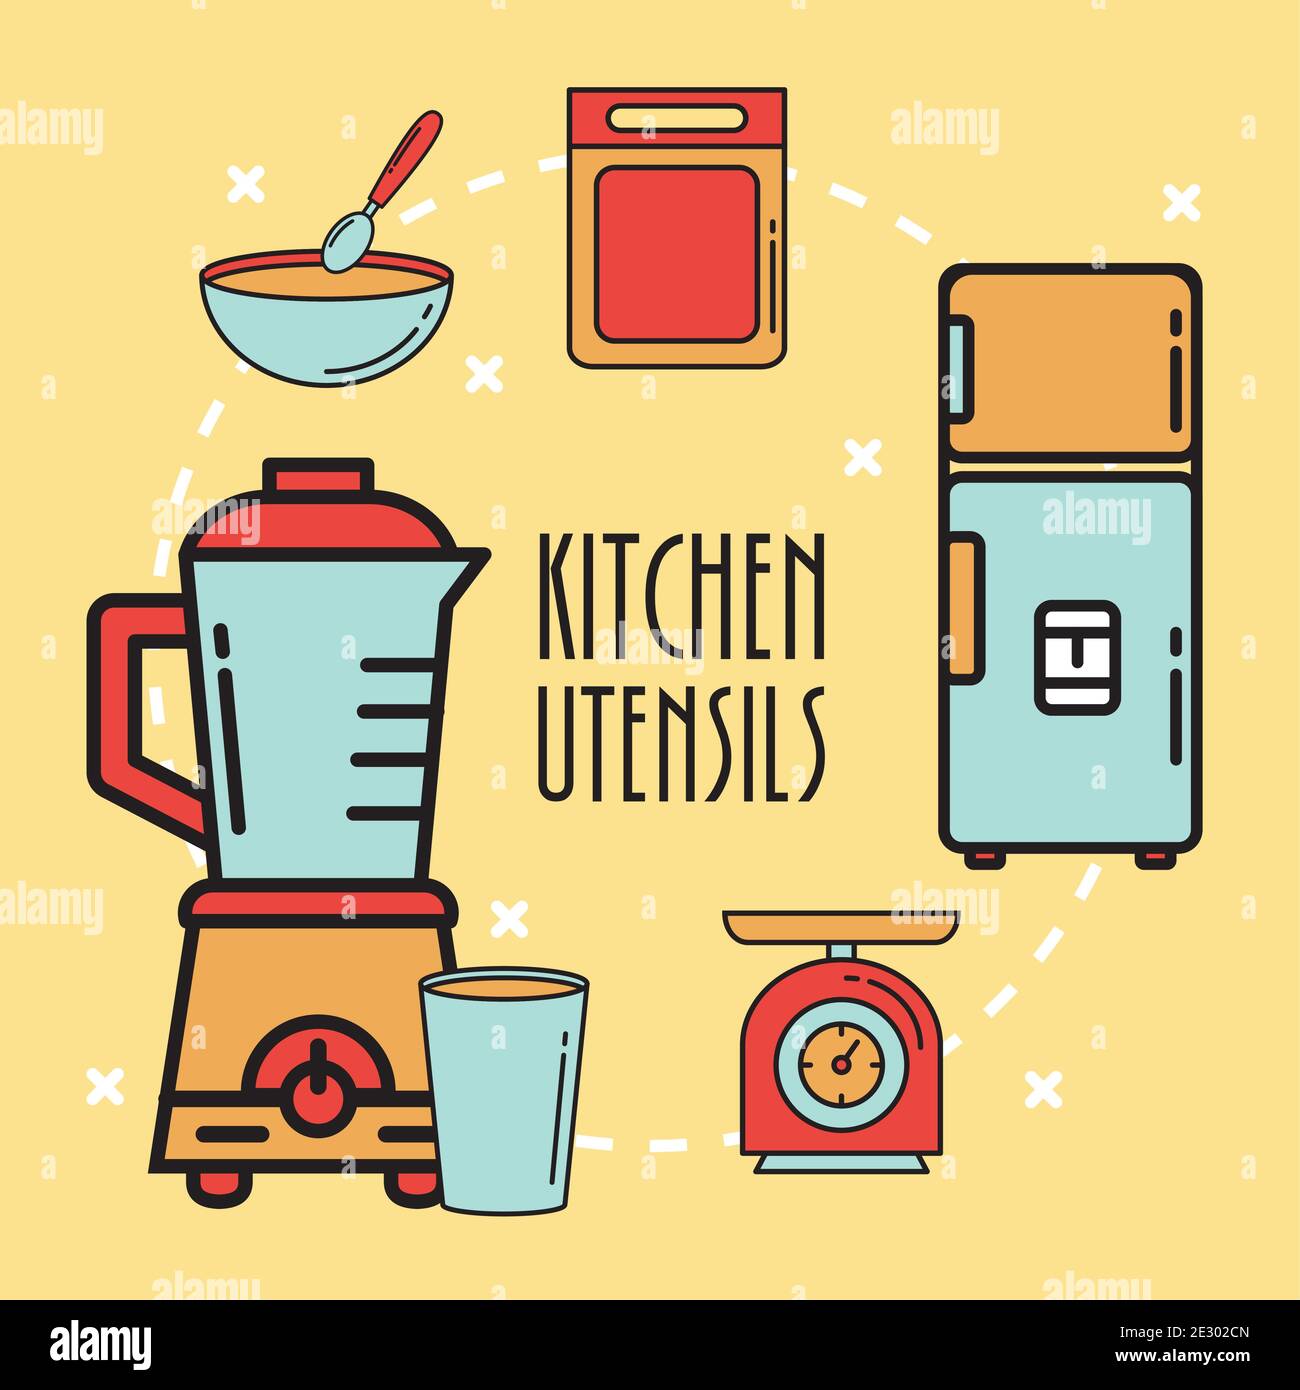 https://c8.alamy.com/comp/2E302CN/bundle-of-thirteen-kitchen-utensils-set-icons-2E302CN.jpg